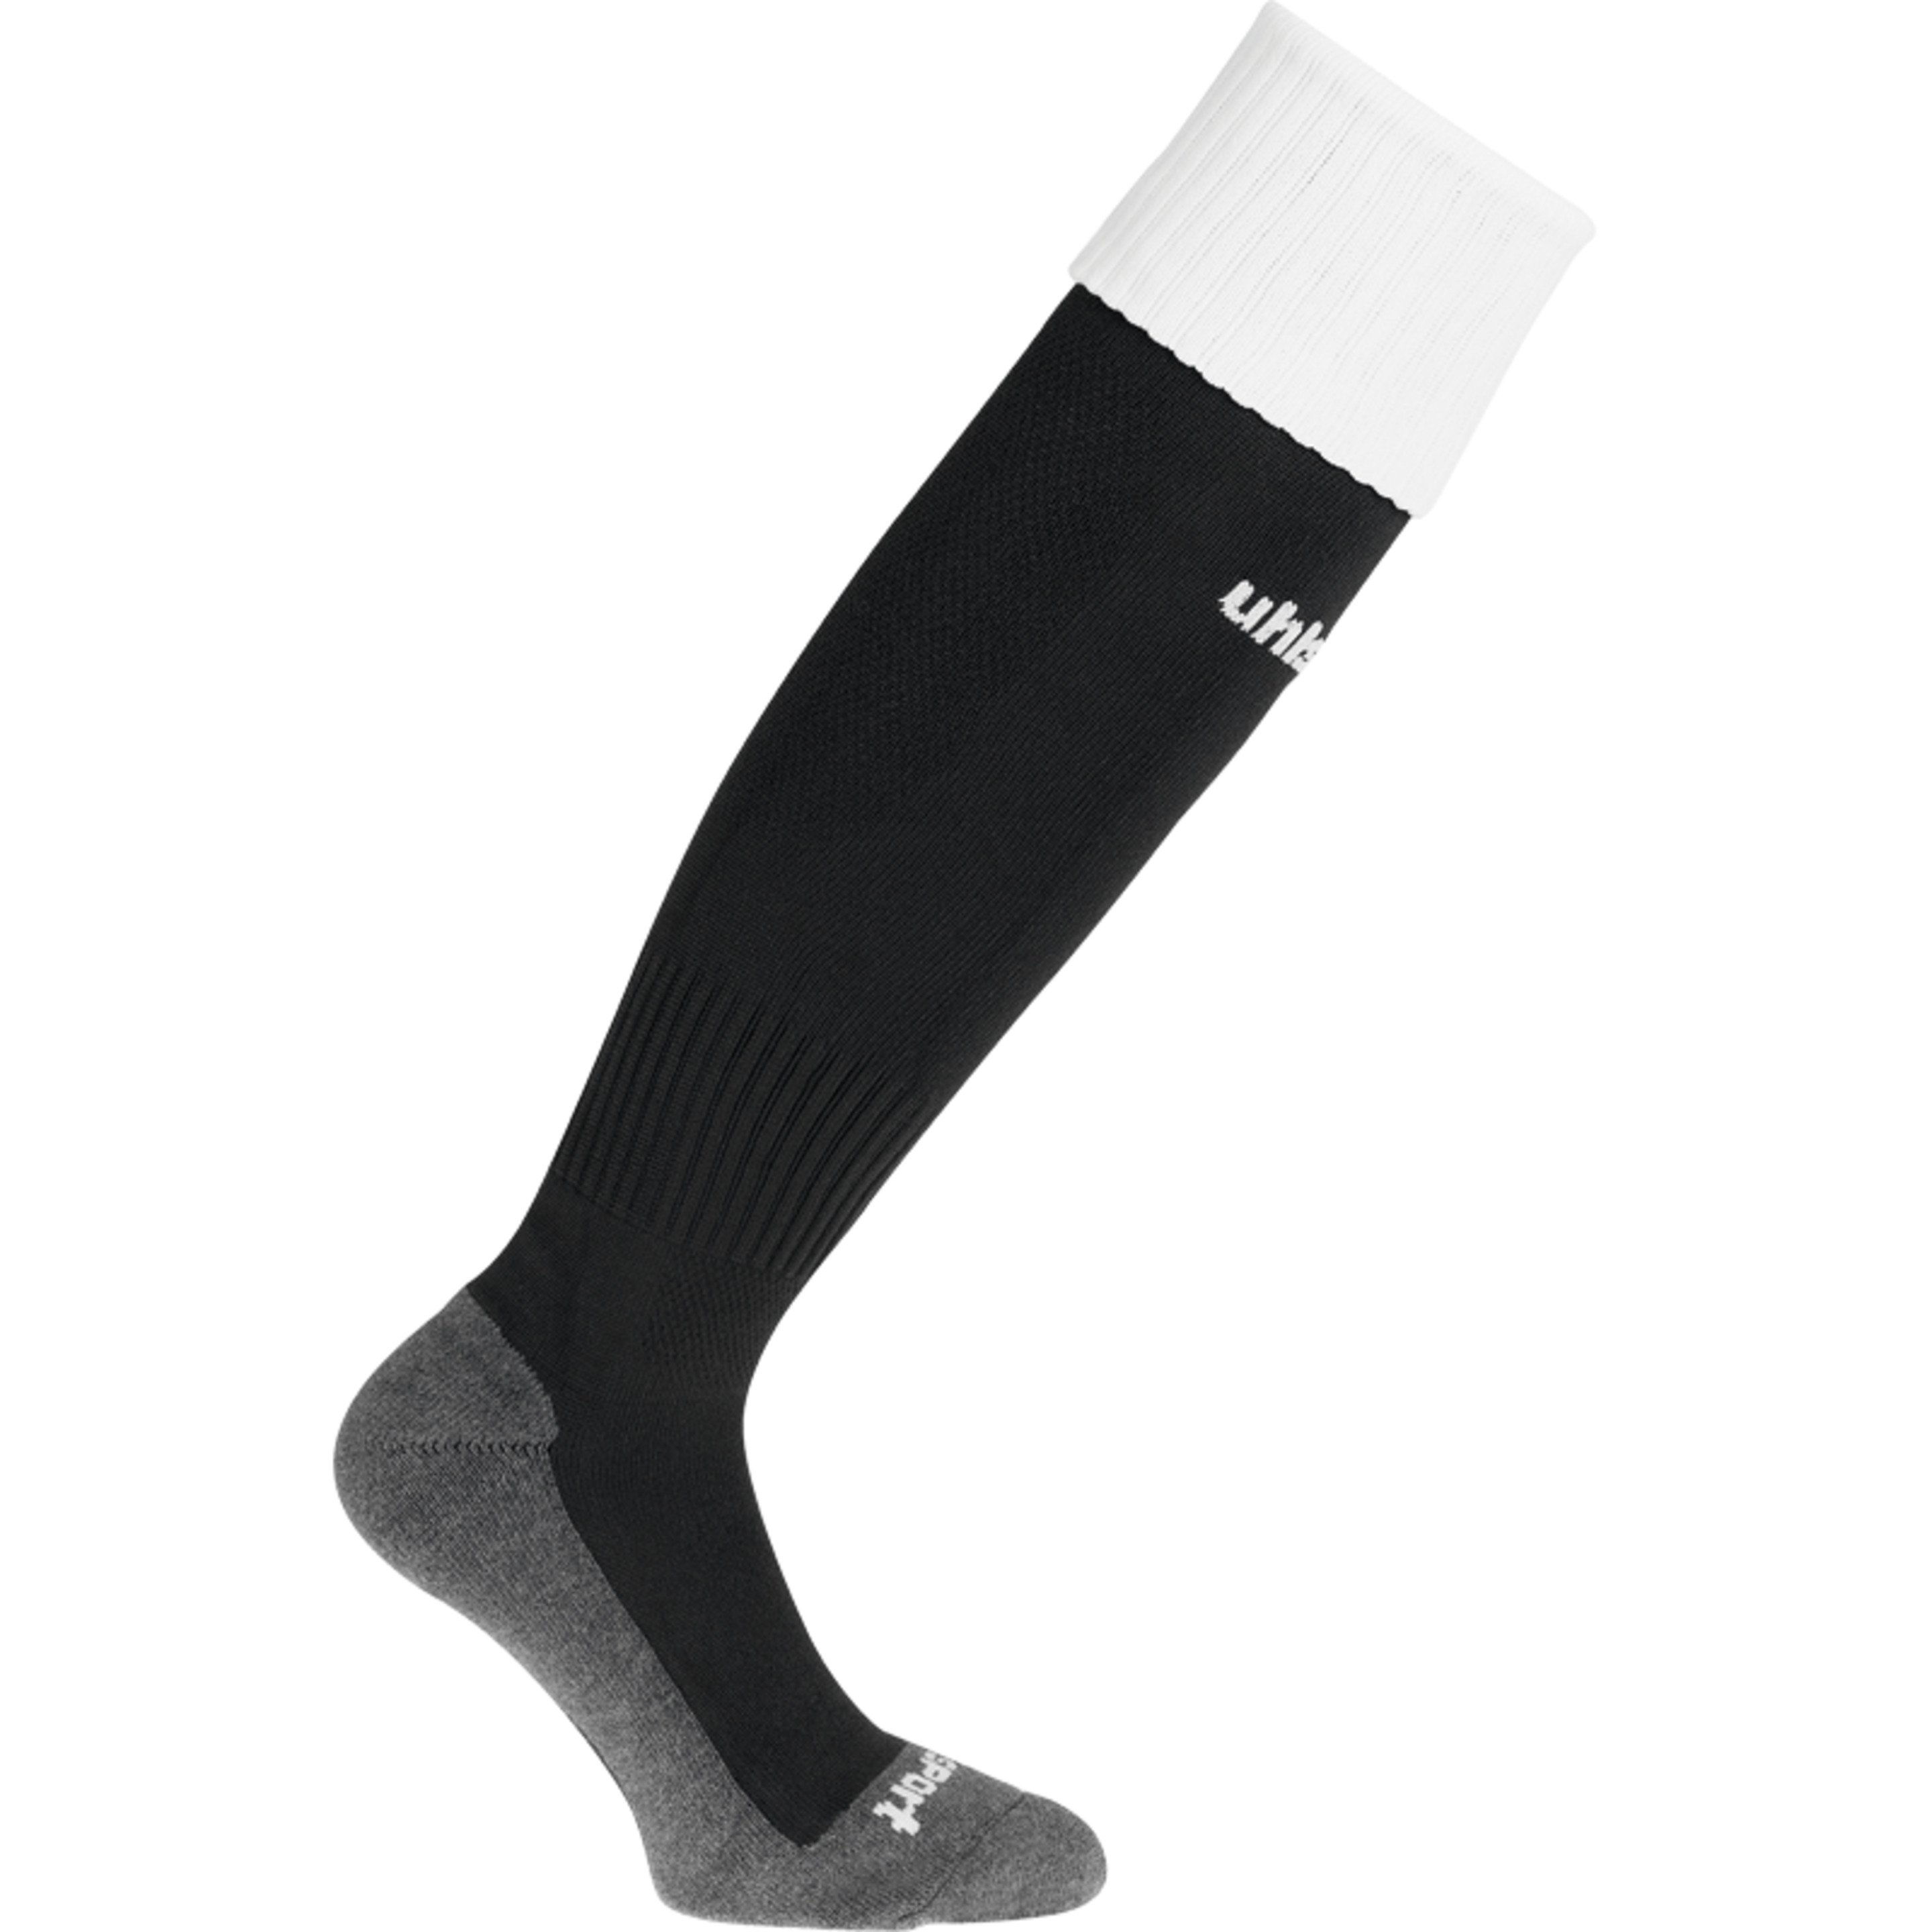 Club Socks Negro/blanco Uhlsport